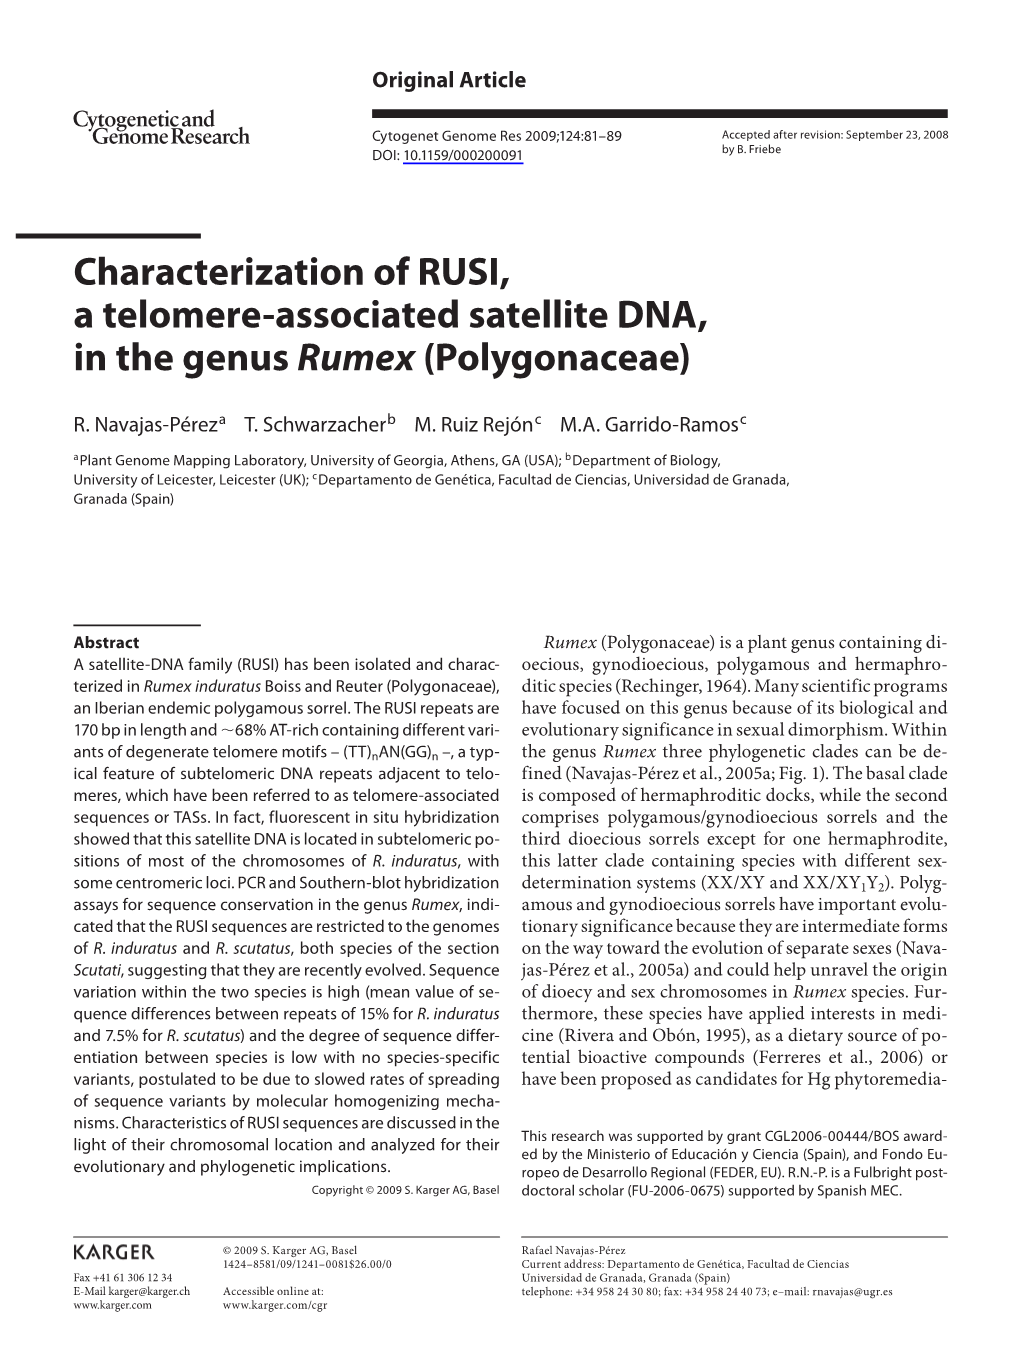 Characterization of RUSI, a Telomere-Associated Satellite DNA, in the Genus Rumex (Polygonaceae)